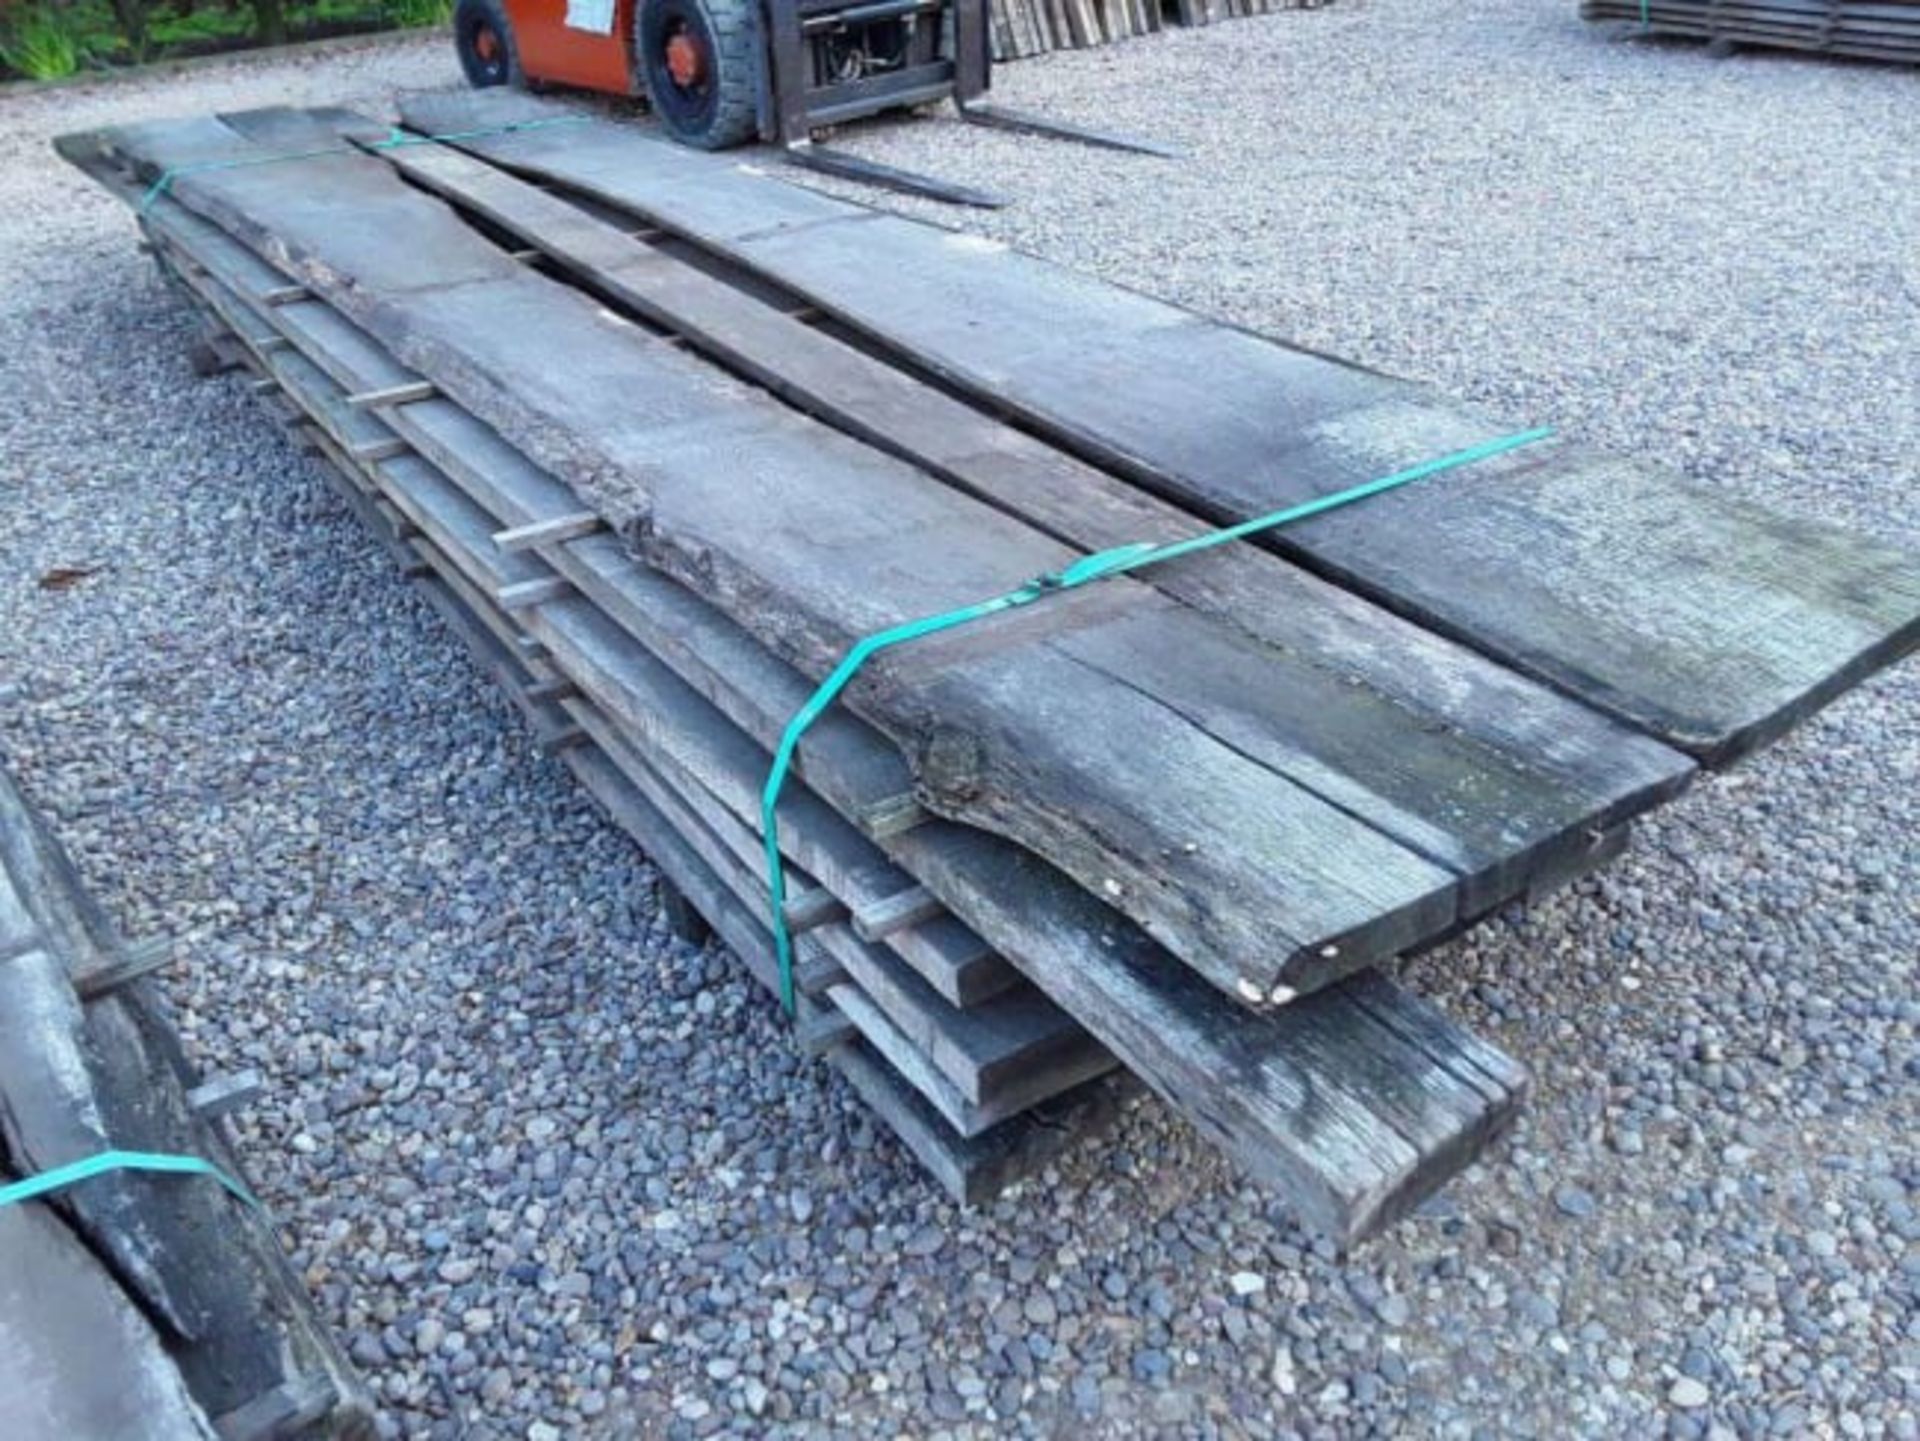 30 x Hardwood Sawn Timber Air Dried Waney Edge / Live Edge / Square Edge English Oak Boards / Sla...